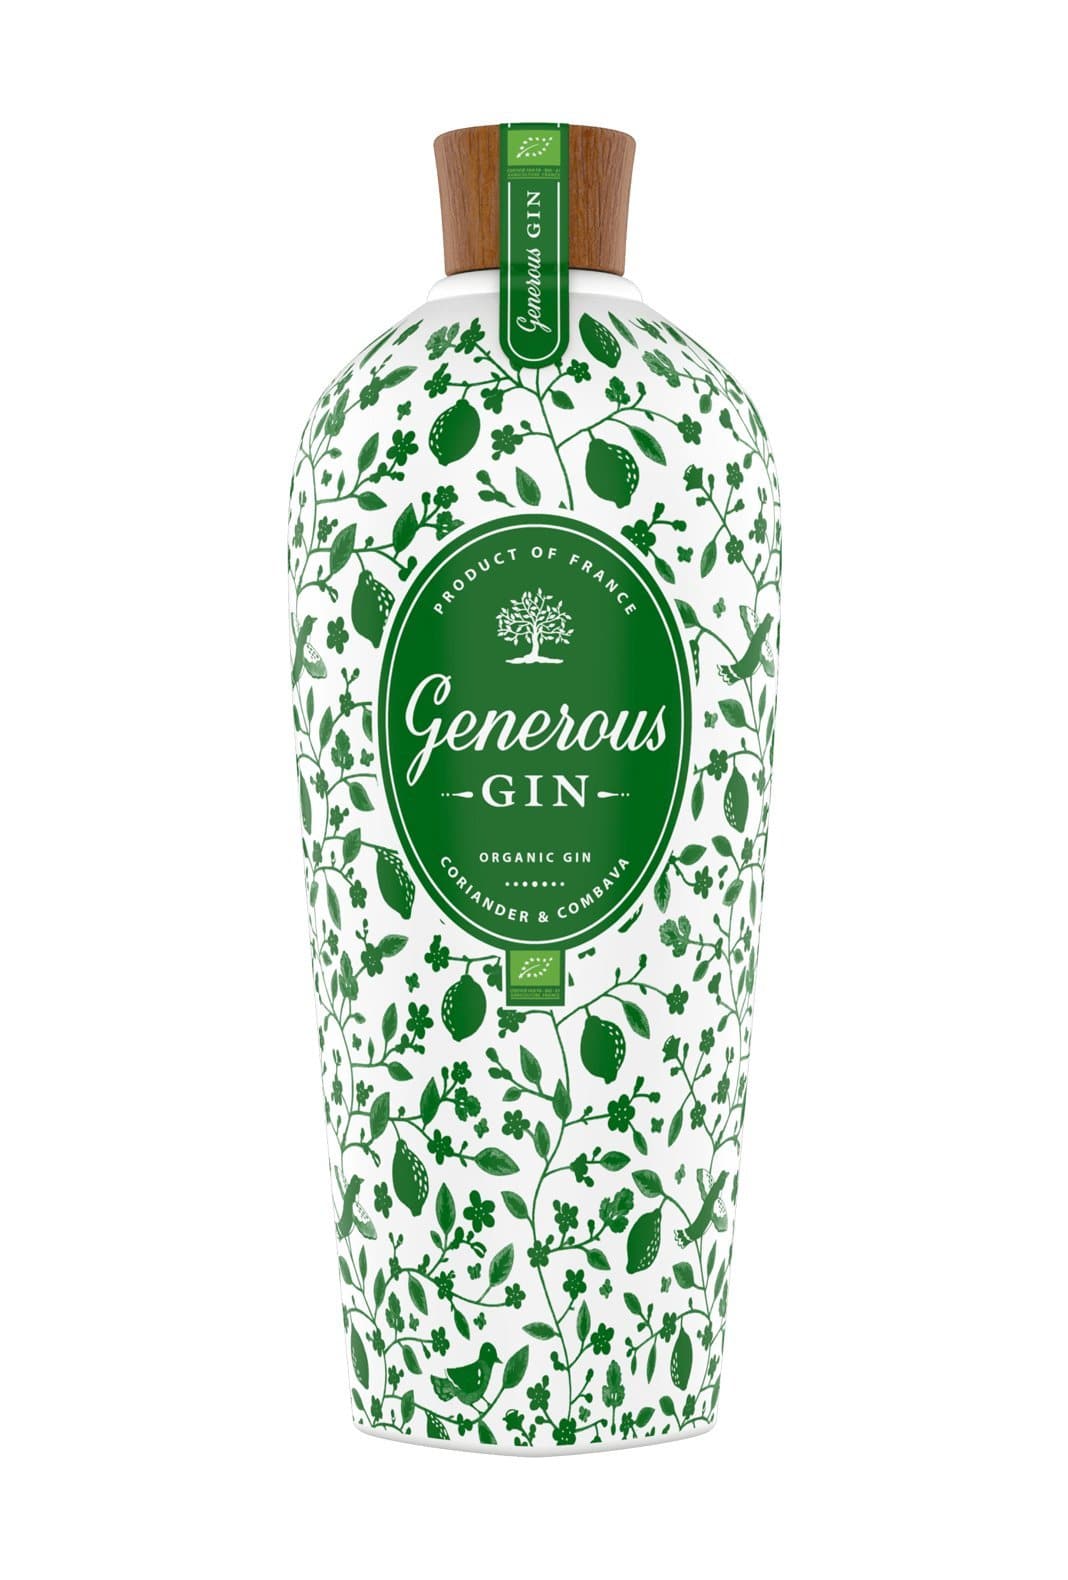 Generous Gin Organic 44% 700ml | Gin | Shop online at Spirits of France